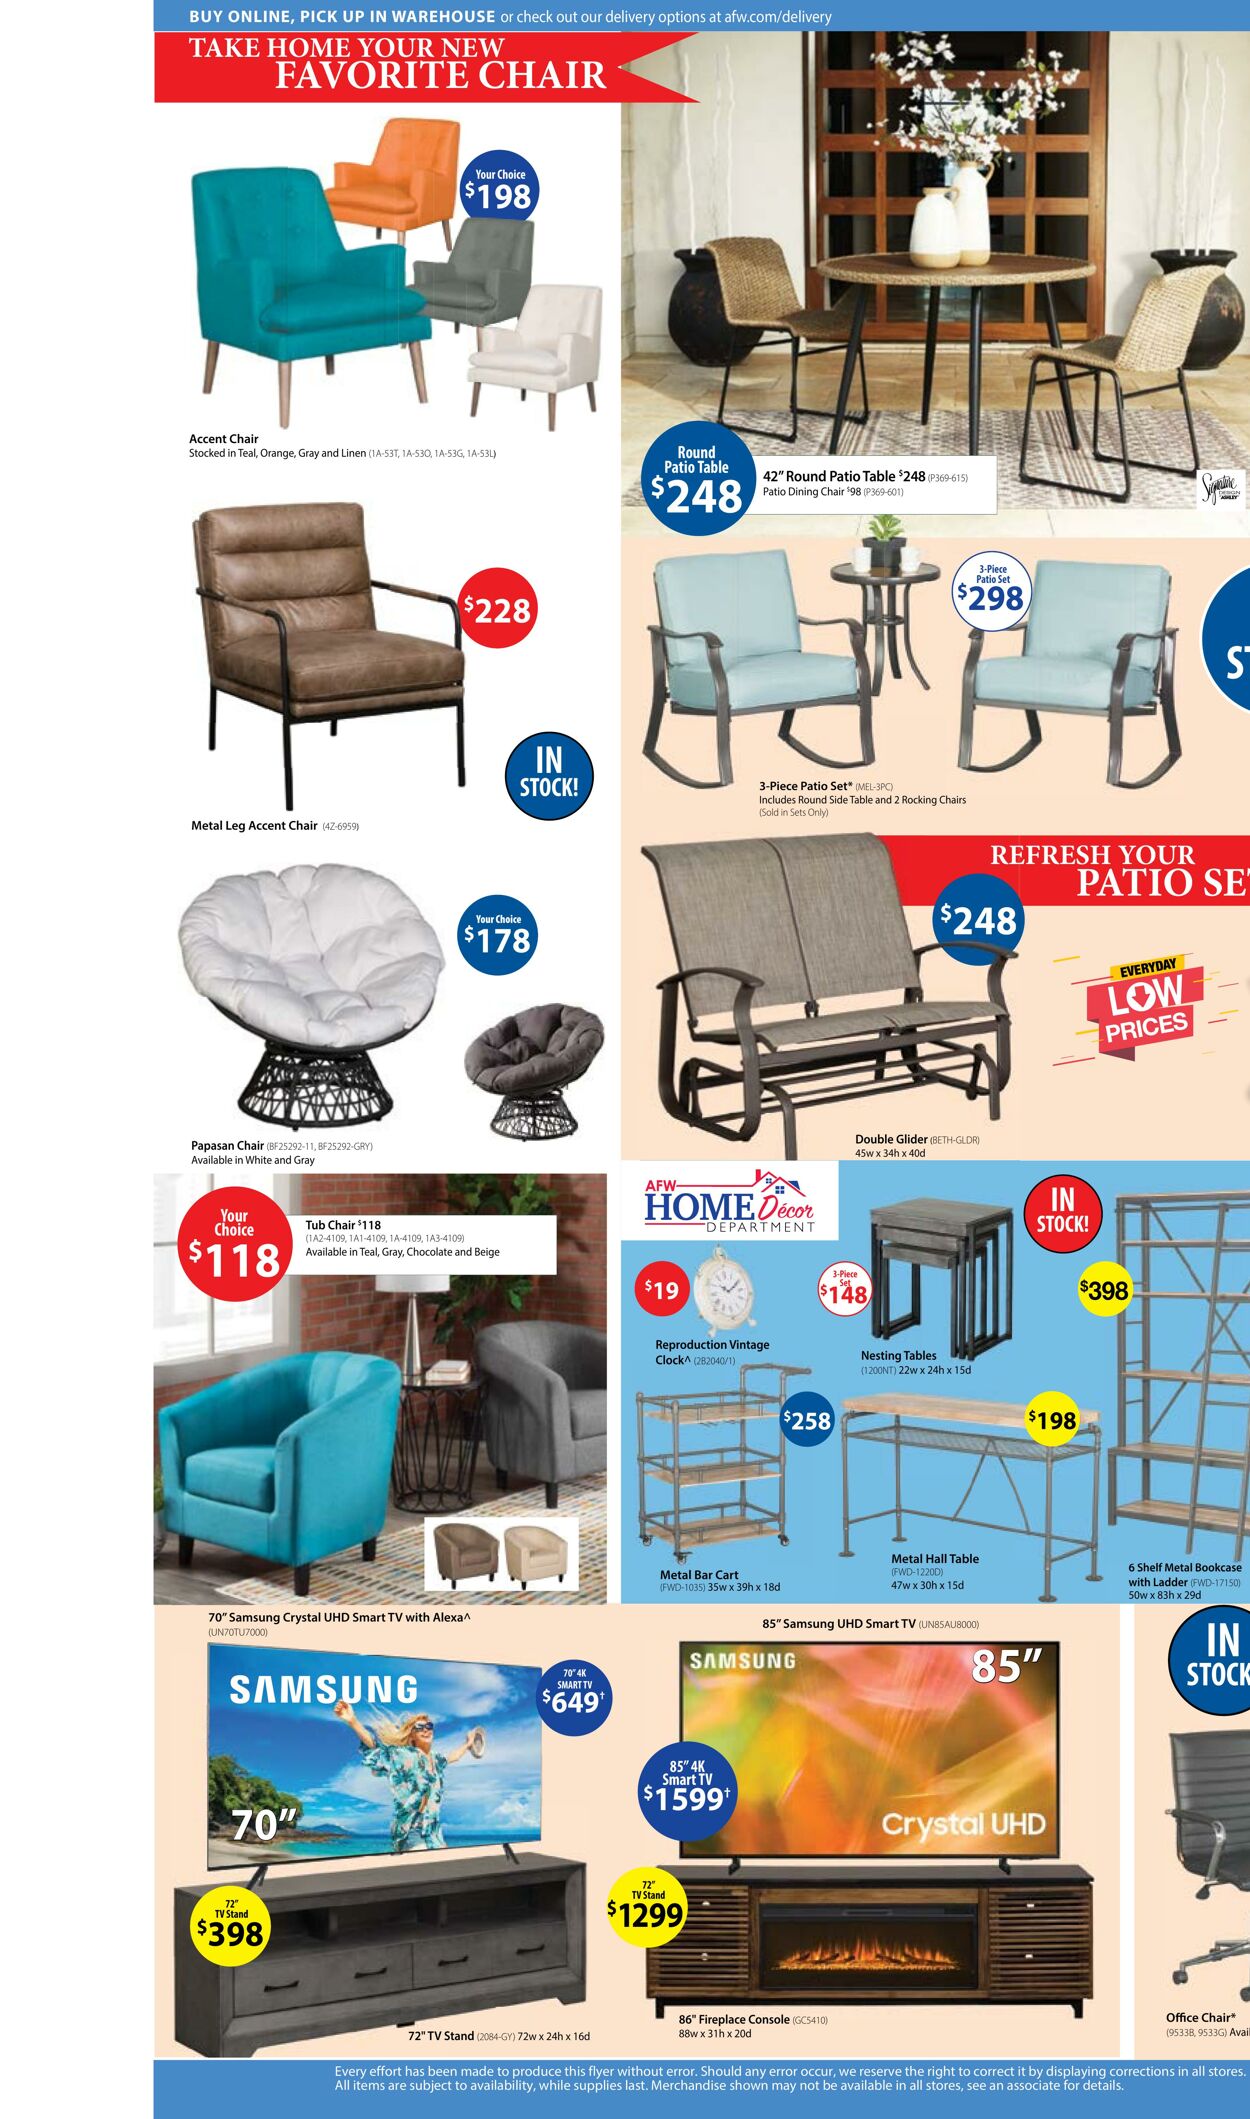 Weekly ad American Furniture Warehouse 06/01/2022 - 06/07/2022